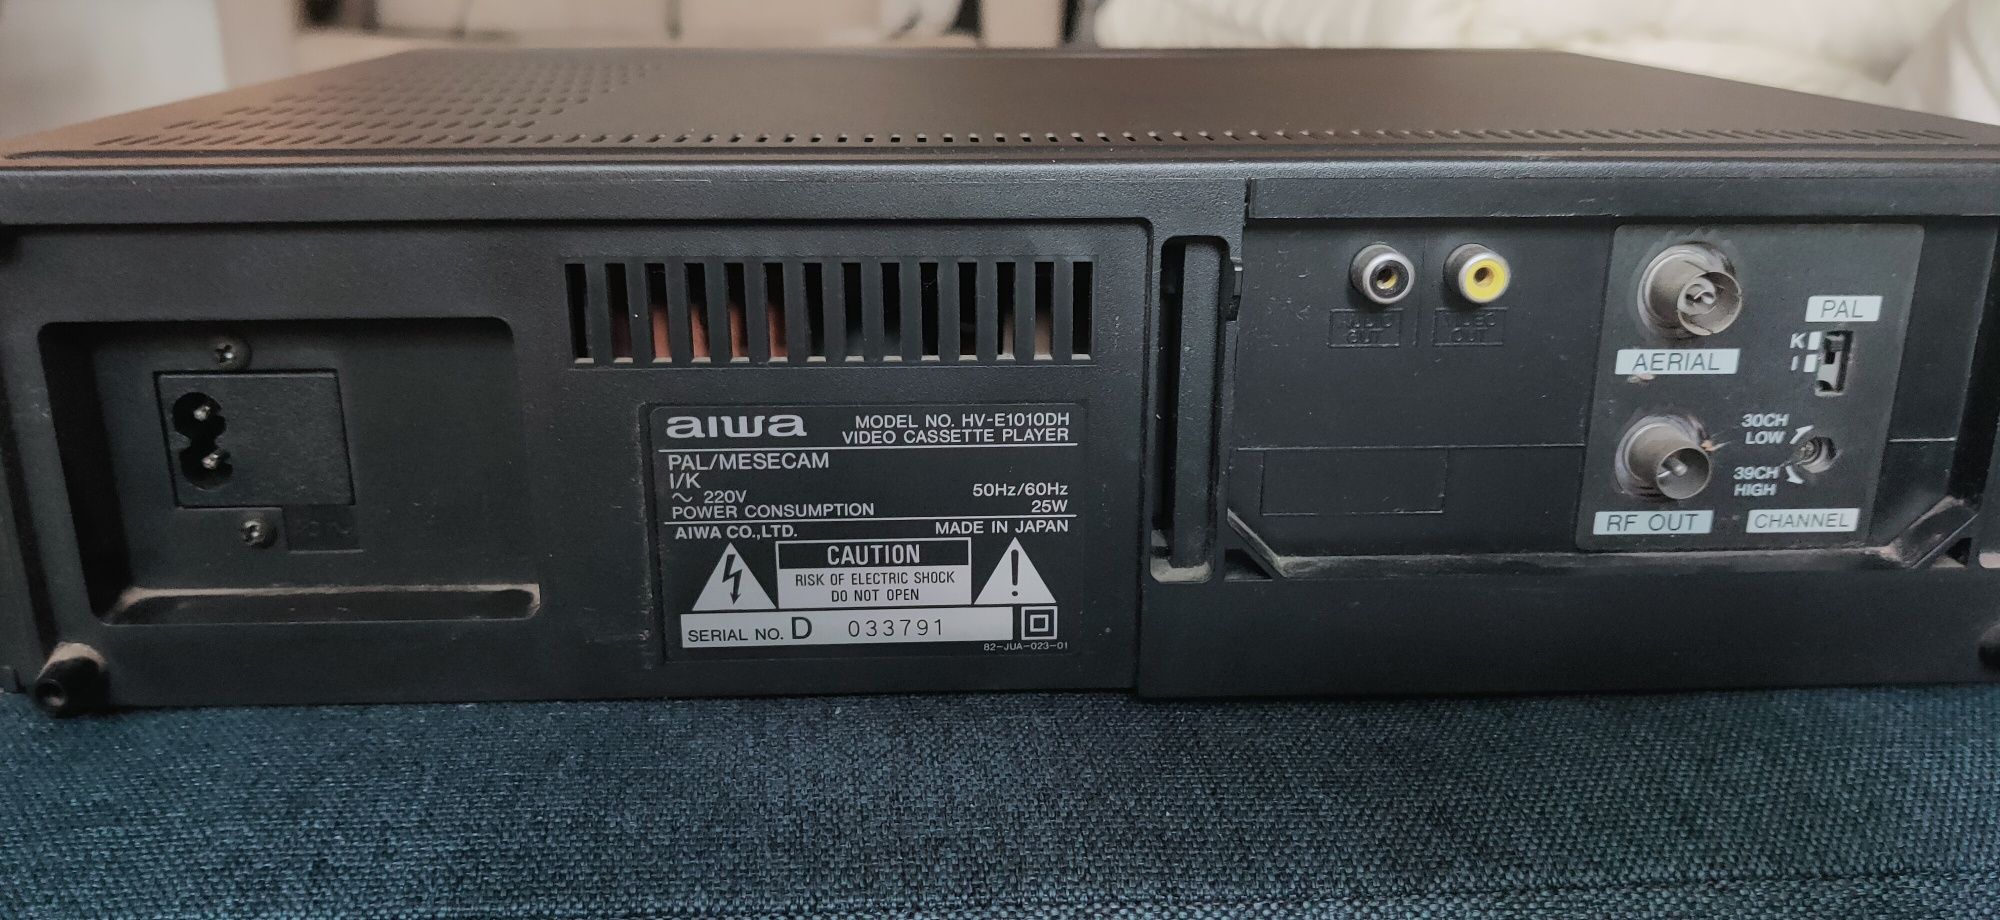 [defect] Video player VHS Aiwa E1010